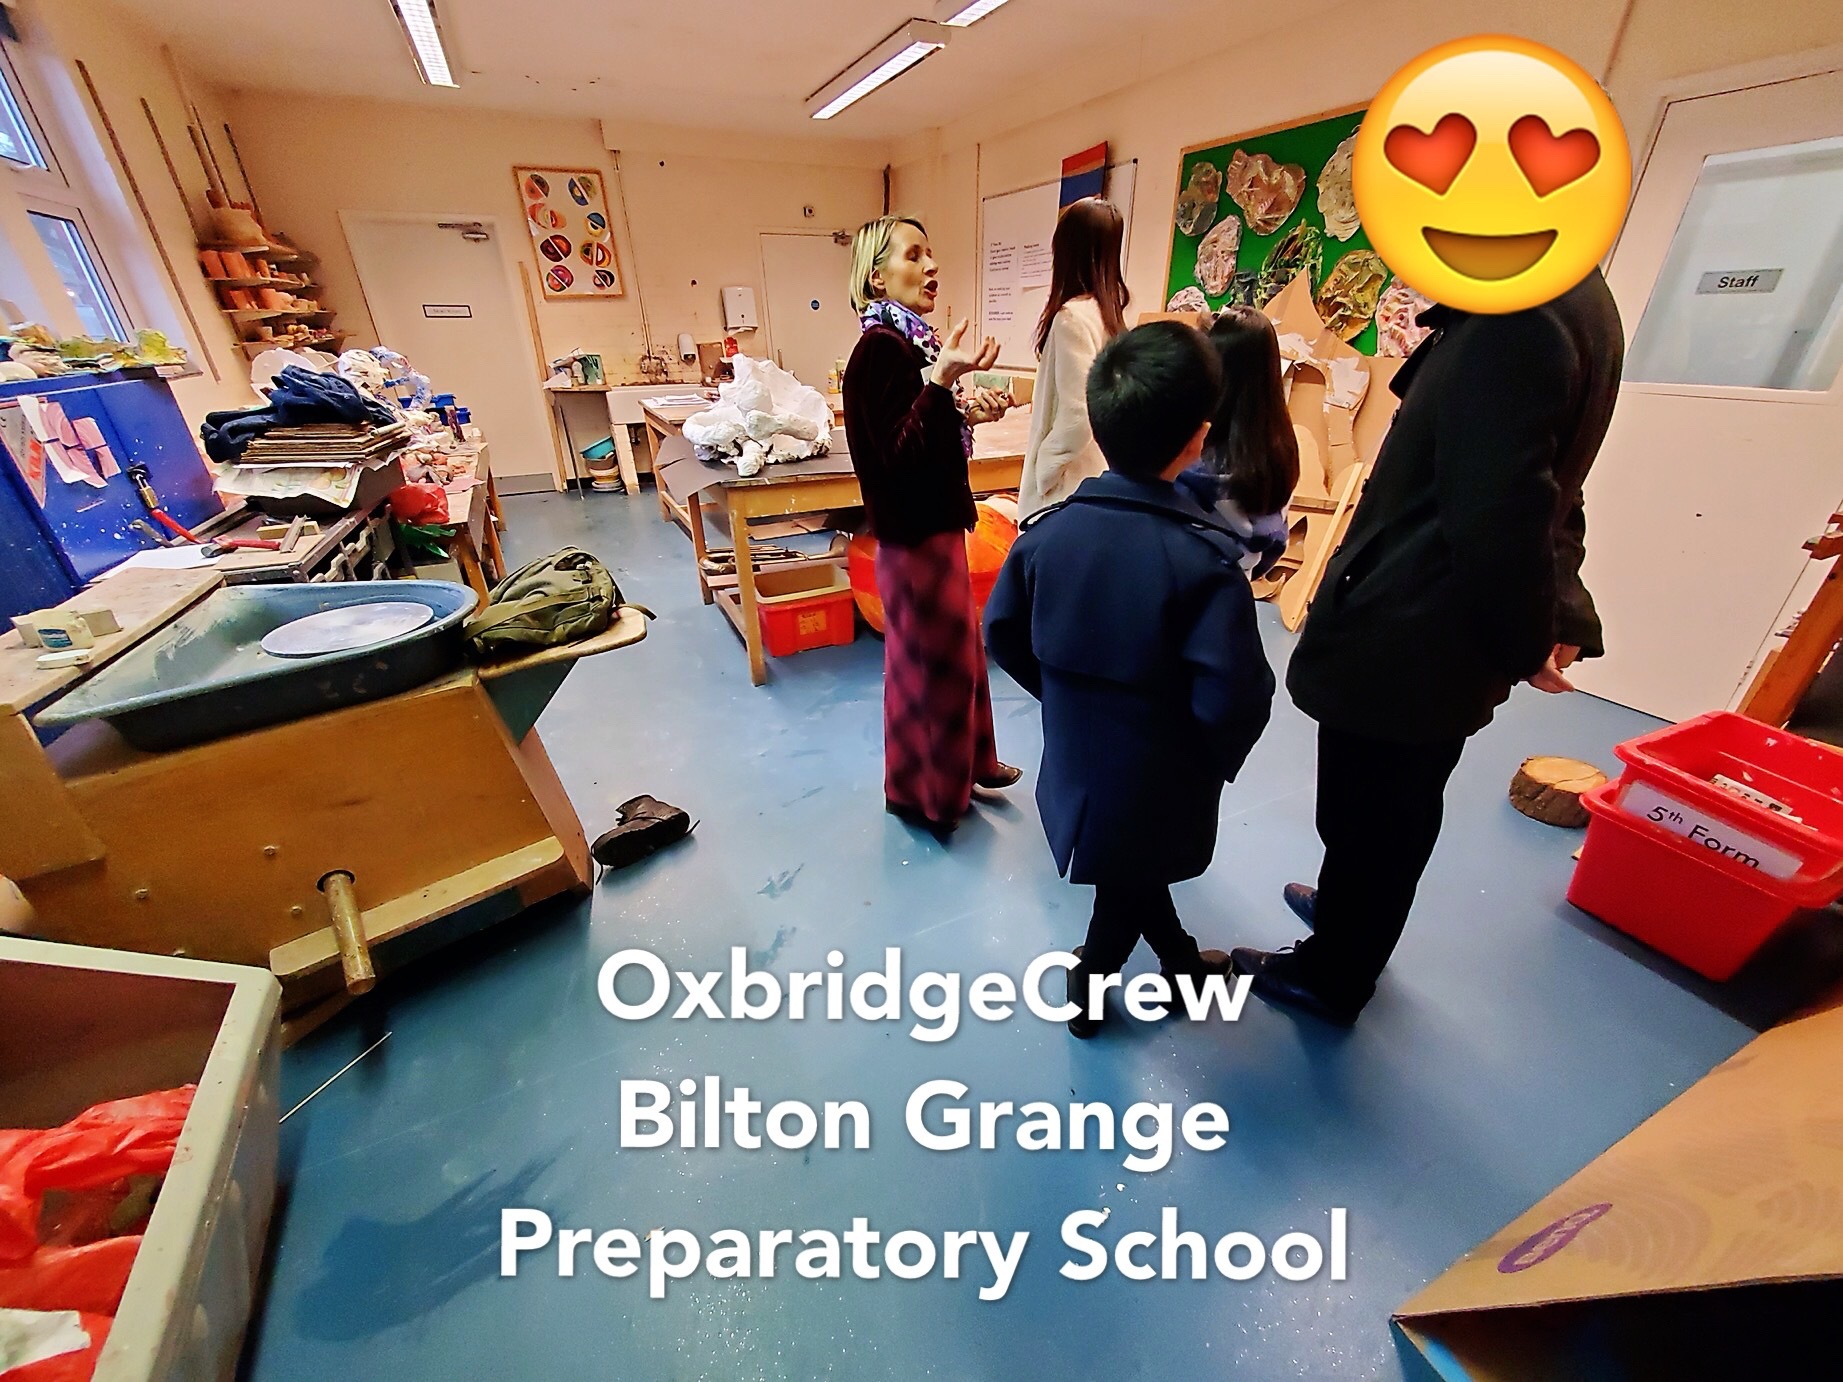 bilton grange preparatory school(比尔顿农庄预备小学)宿舍还有